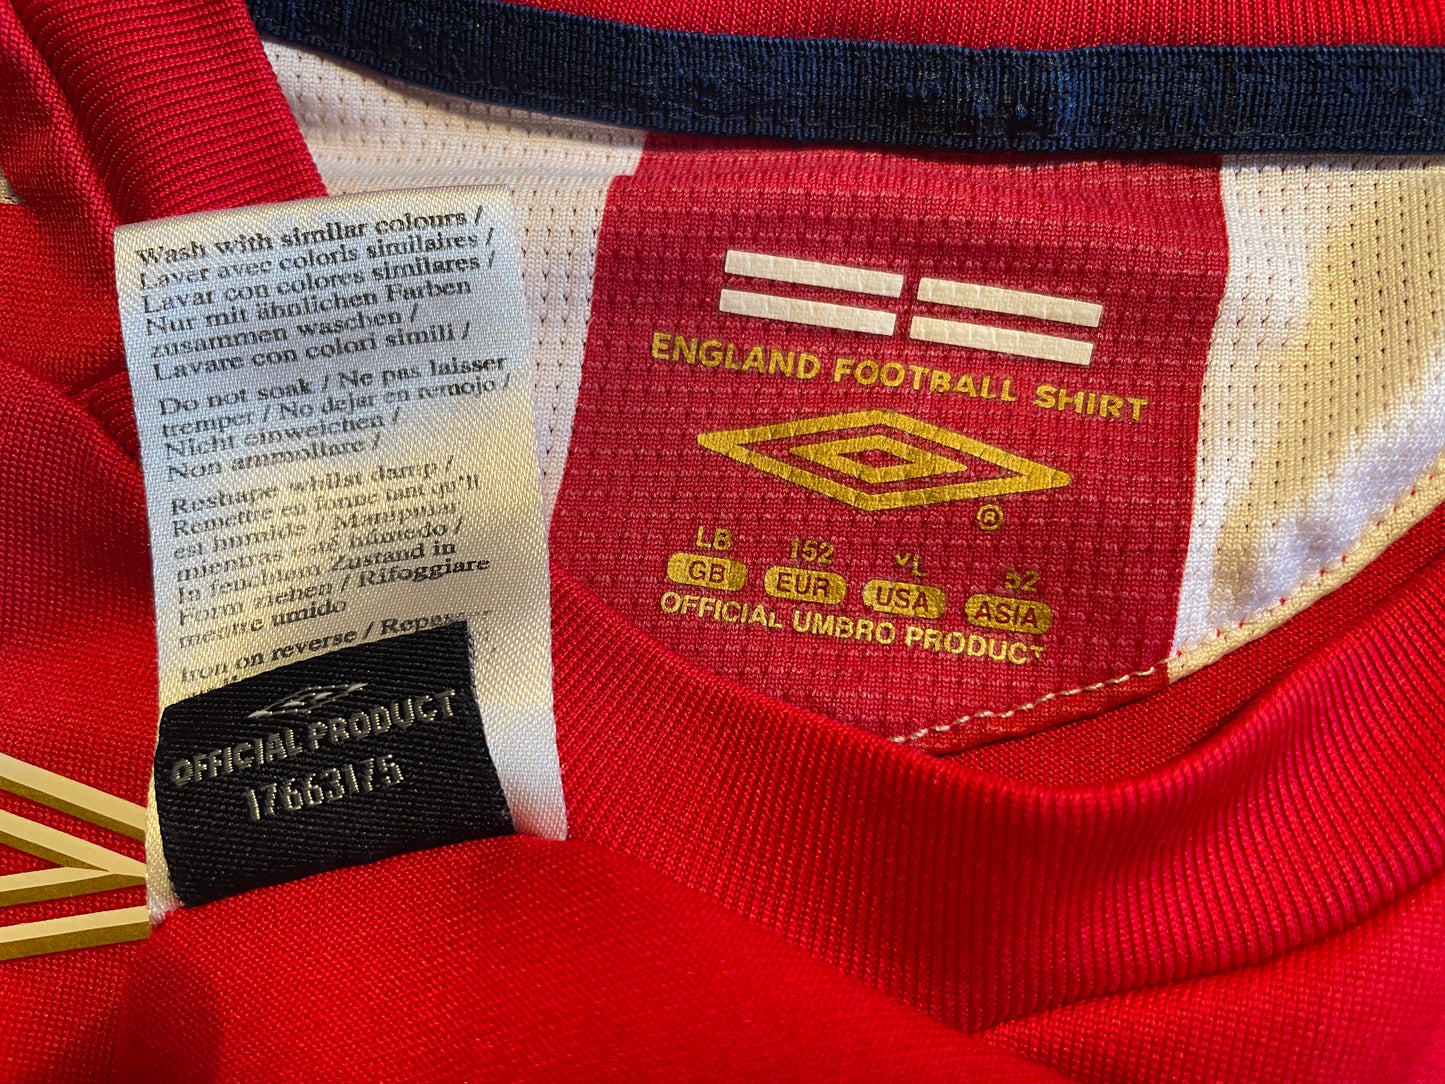 England 2006 Away Shirt OWEN 10 (very good) Adults XXS/Large Boys. Height 19 inches.